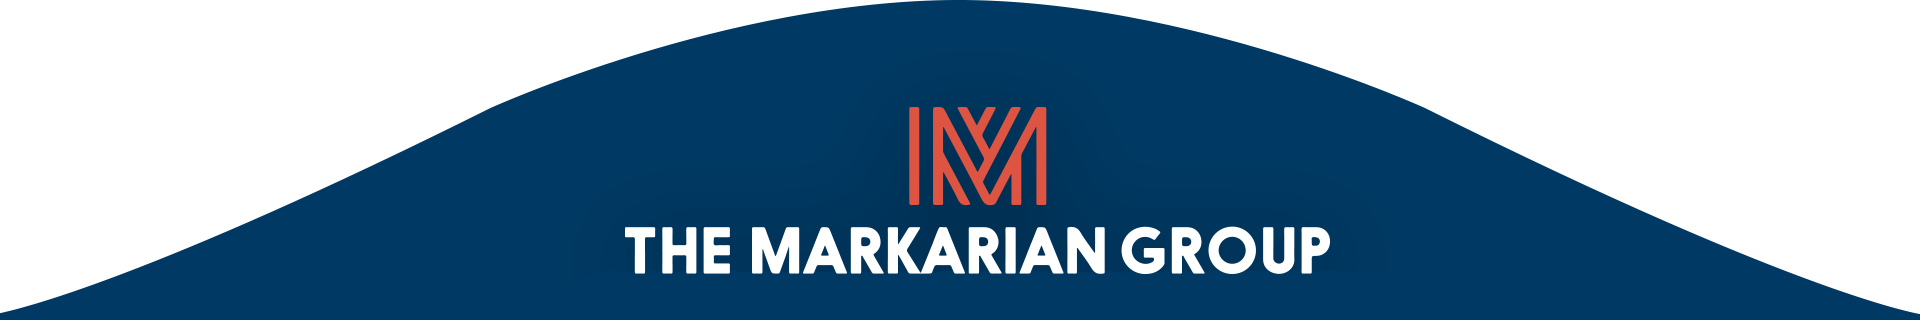 The Markarian Group Logo